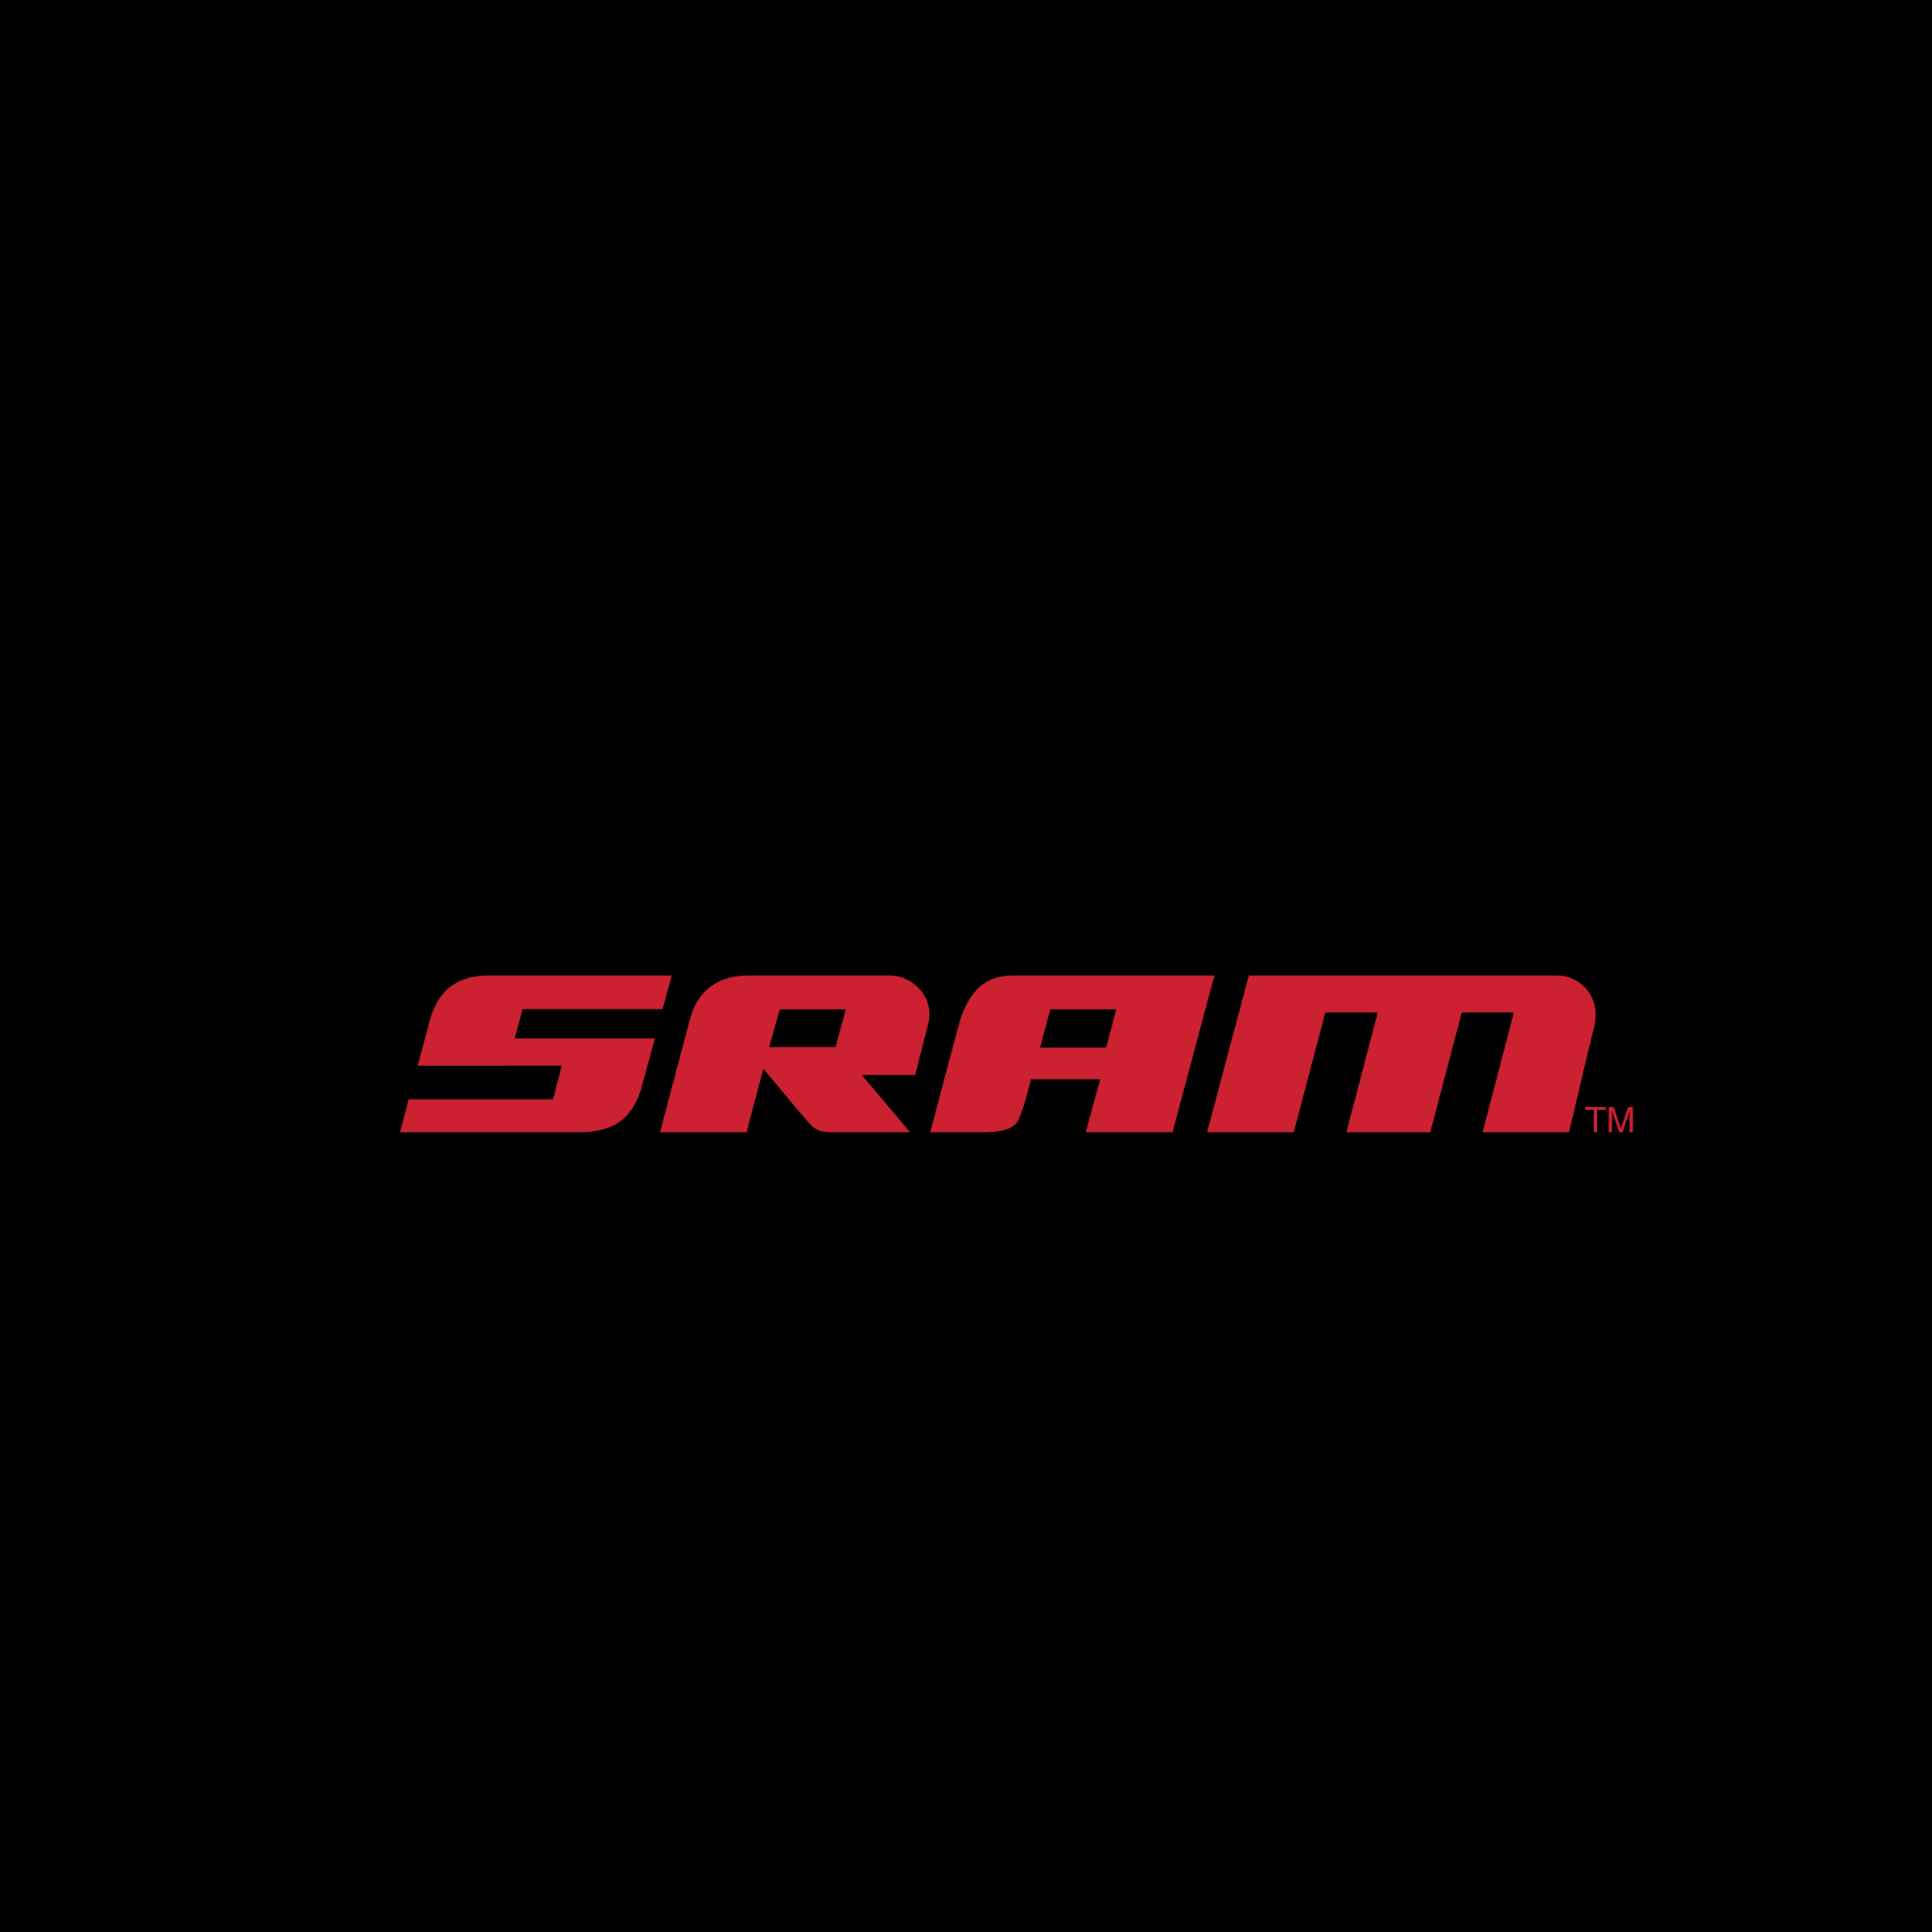 SRAM Logo - SRAM Logo PNG Transparent & SVG Vector - Freebie Supply